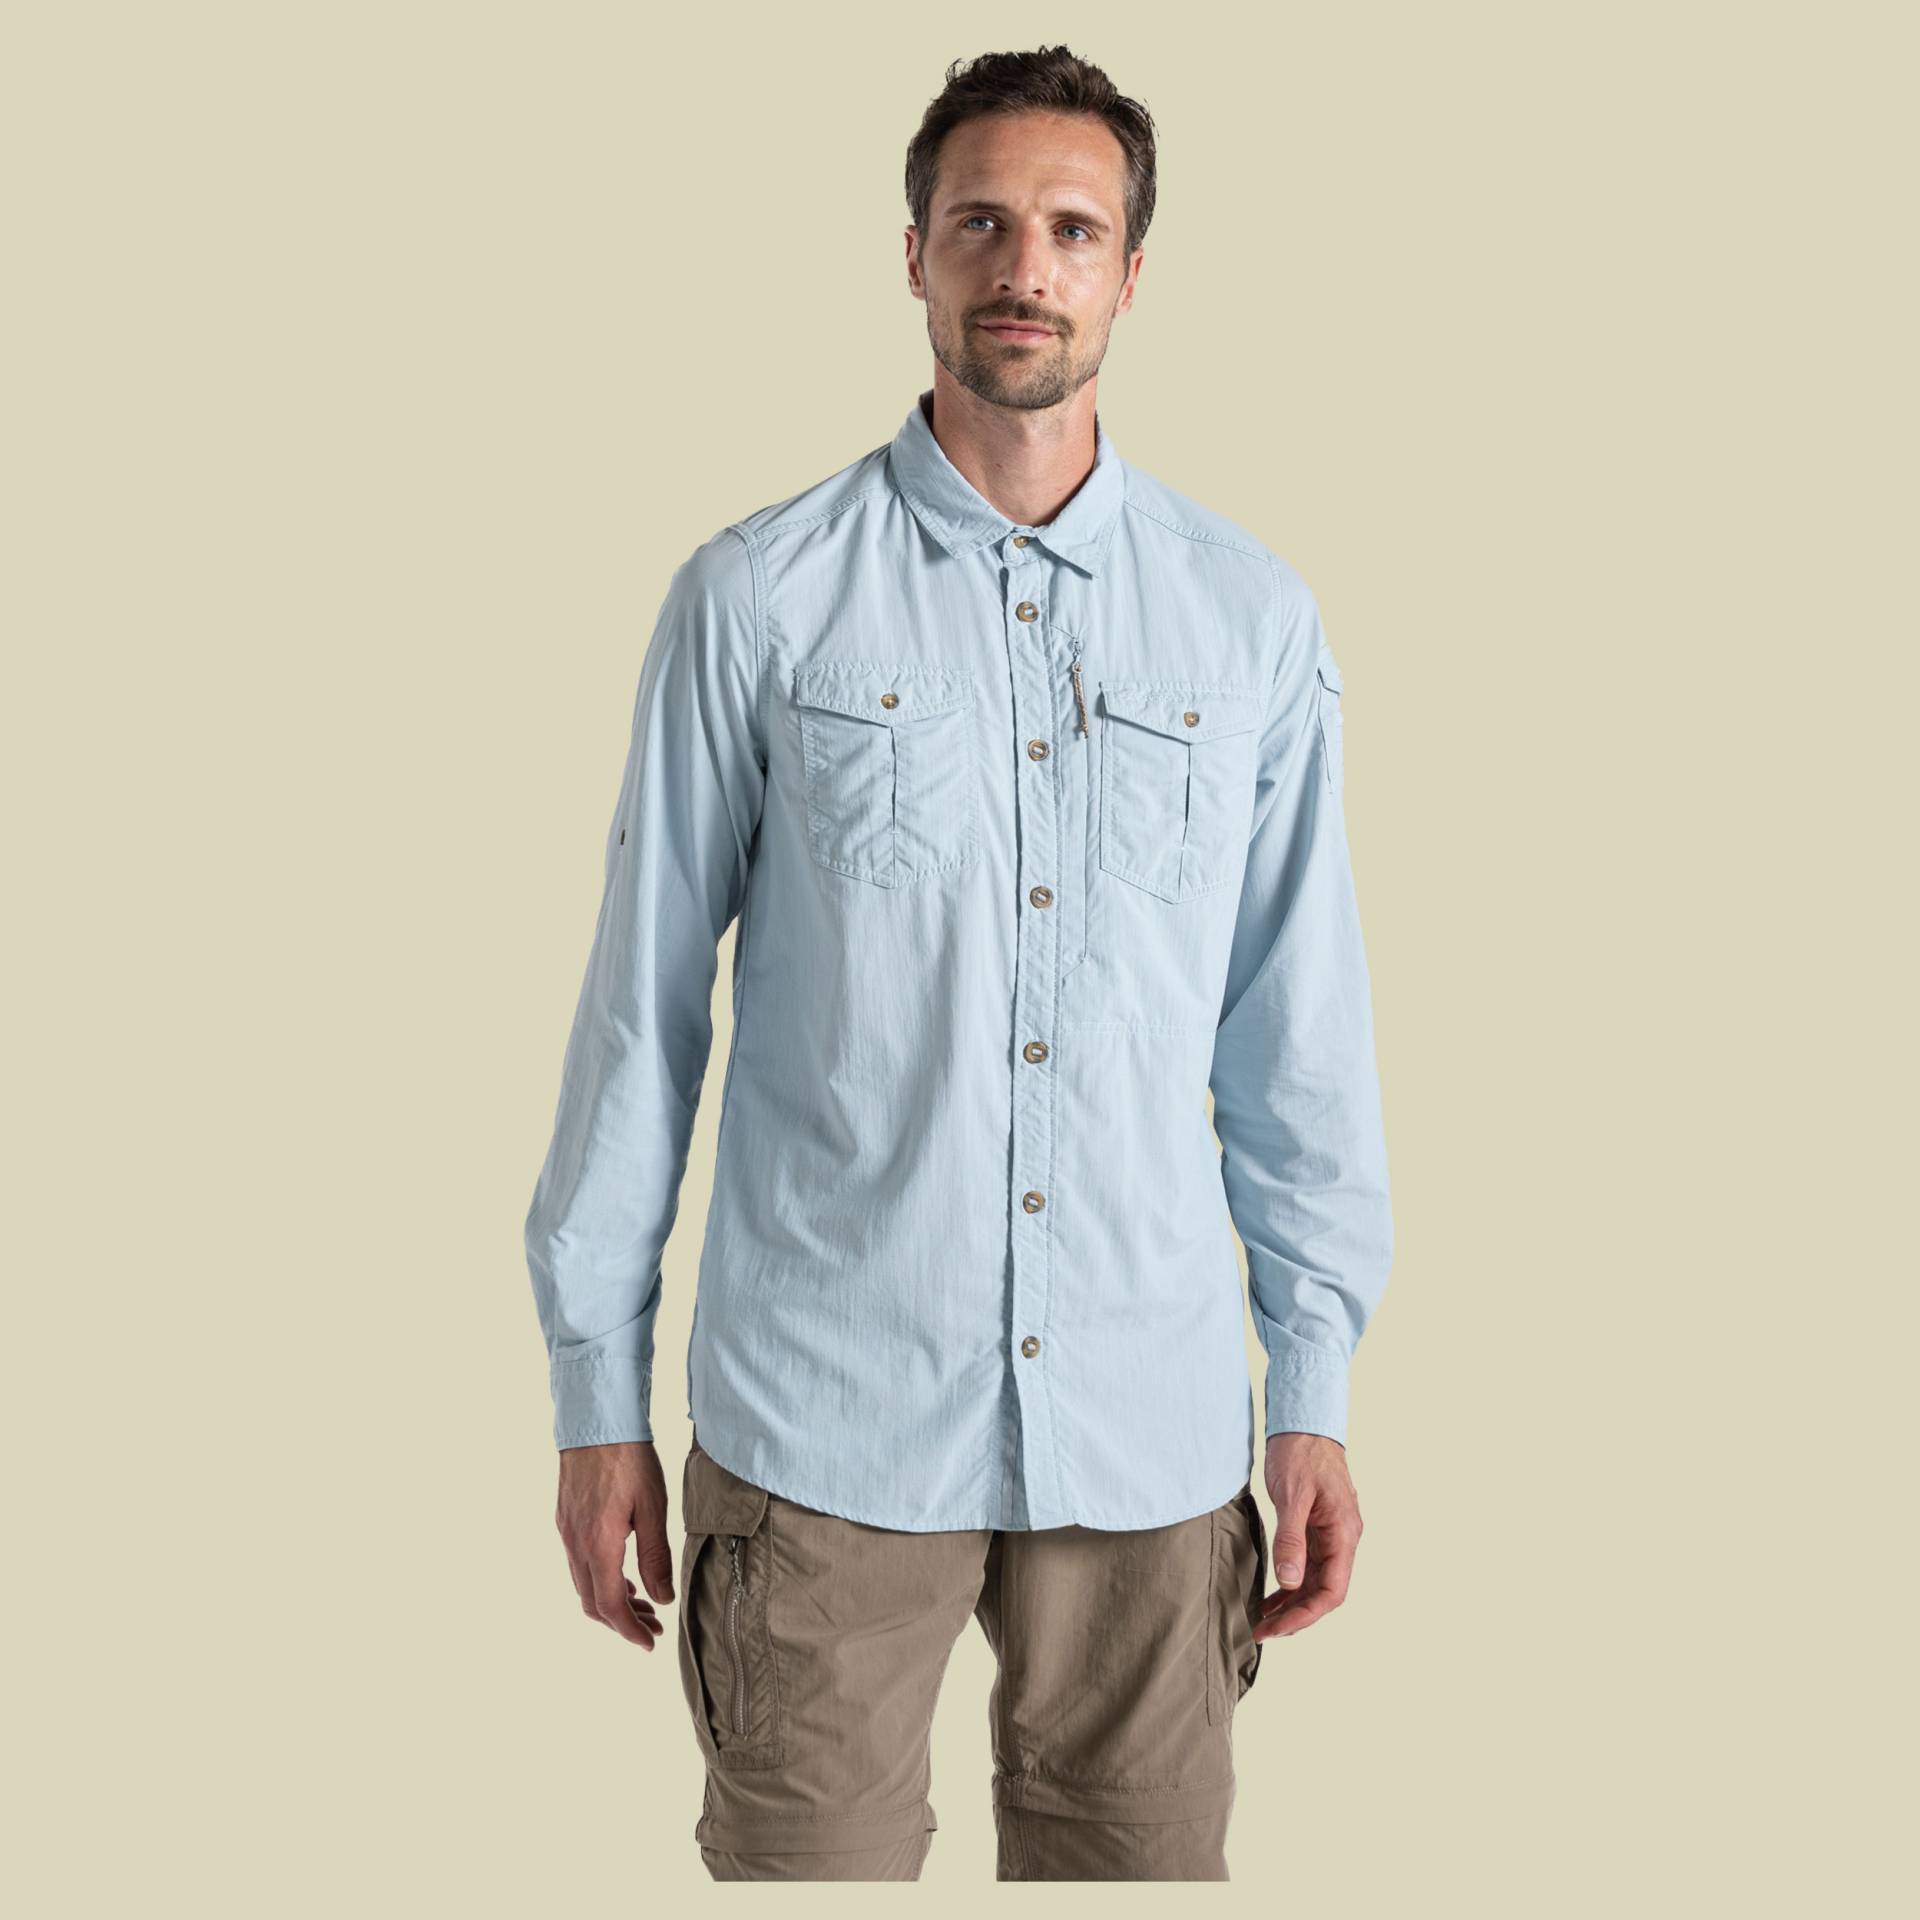 NosiLife Adventure Long Sleeved Shirt III Men XL blau - niagra blue von Craghoppers